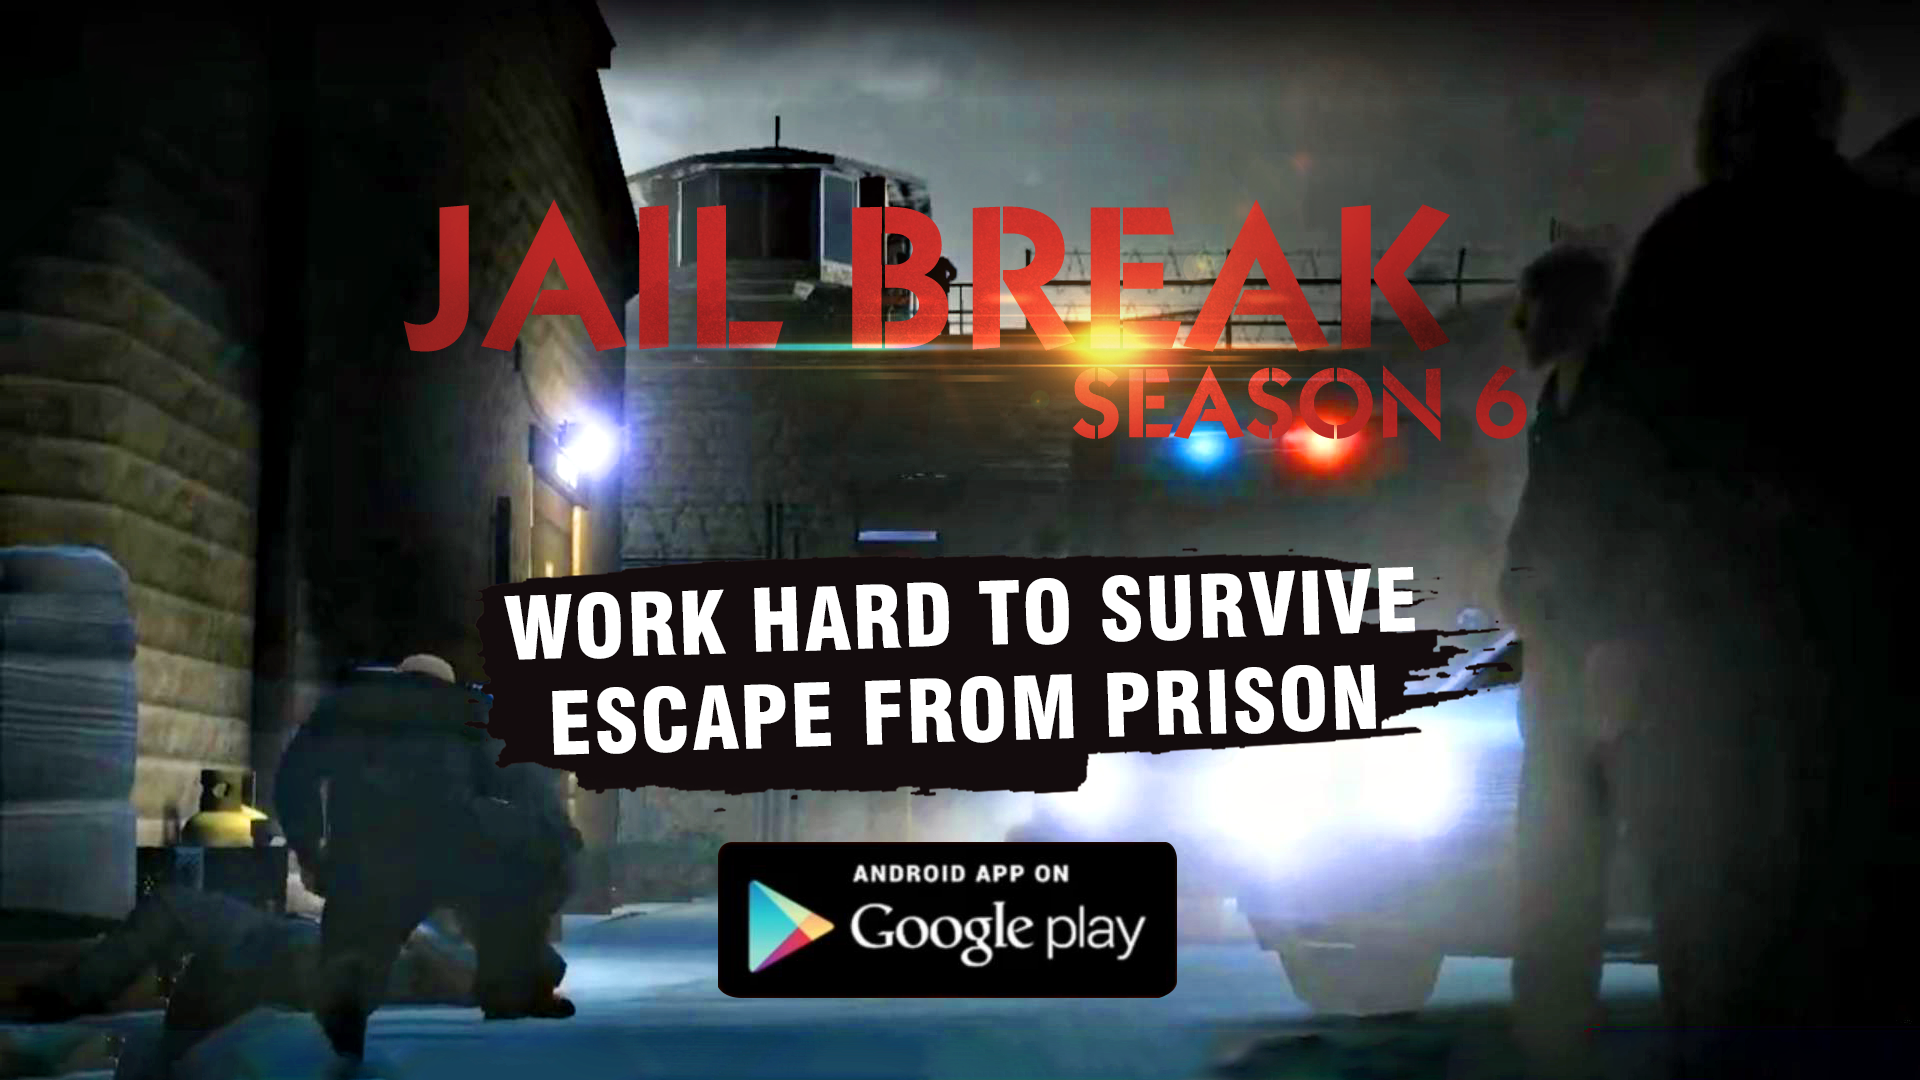 Screenshot 1 of Побег из тюрьмы 6 сезон 1.1.1